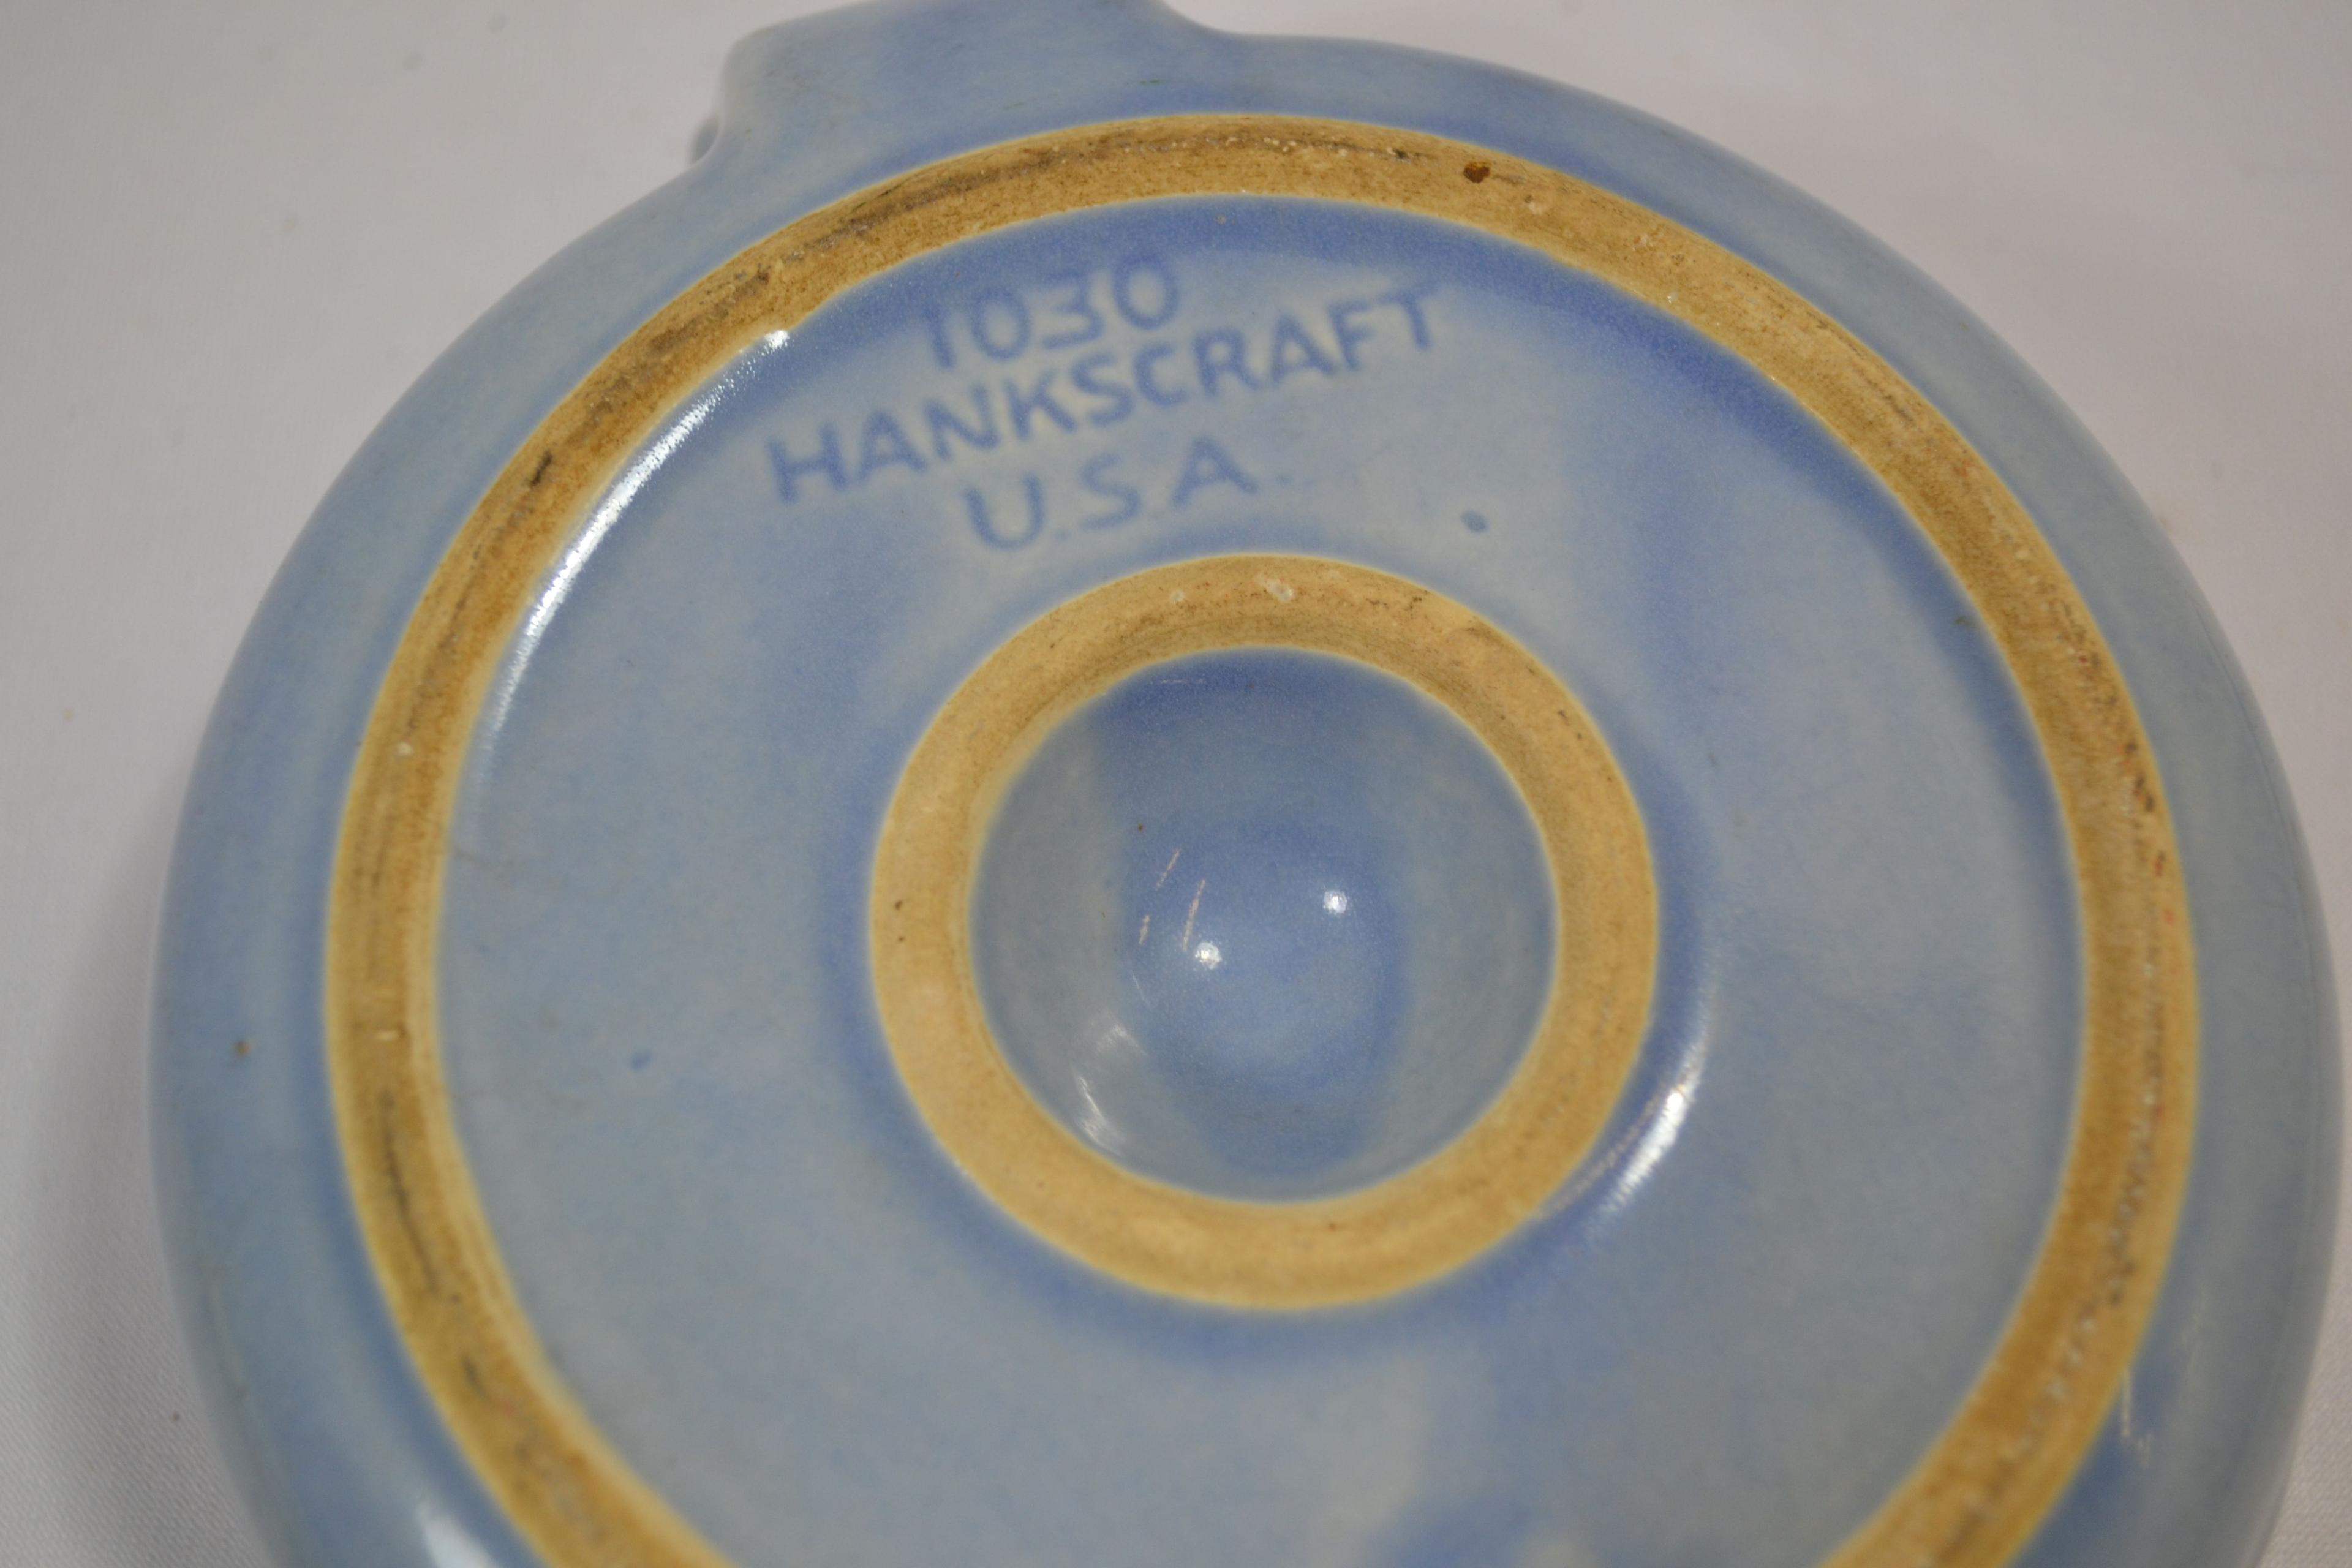 Vintage Hankscraft USA 1030 Child's Divided Dish; Has Crack